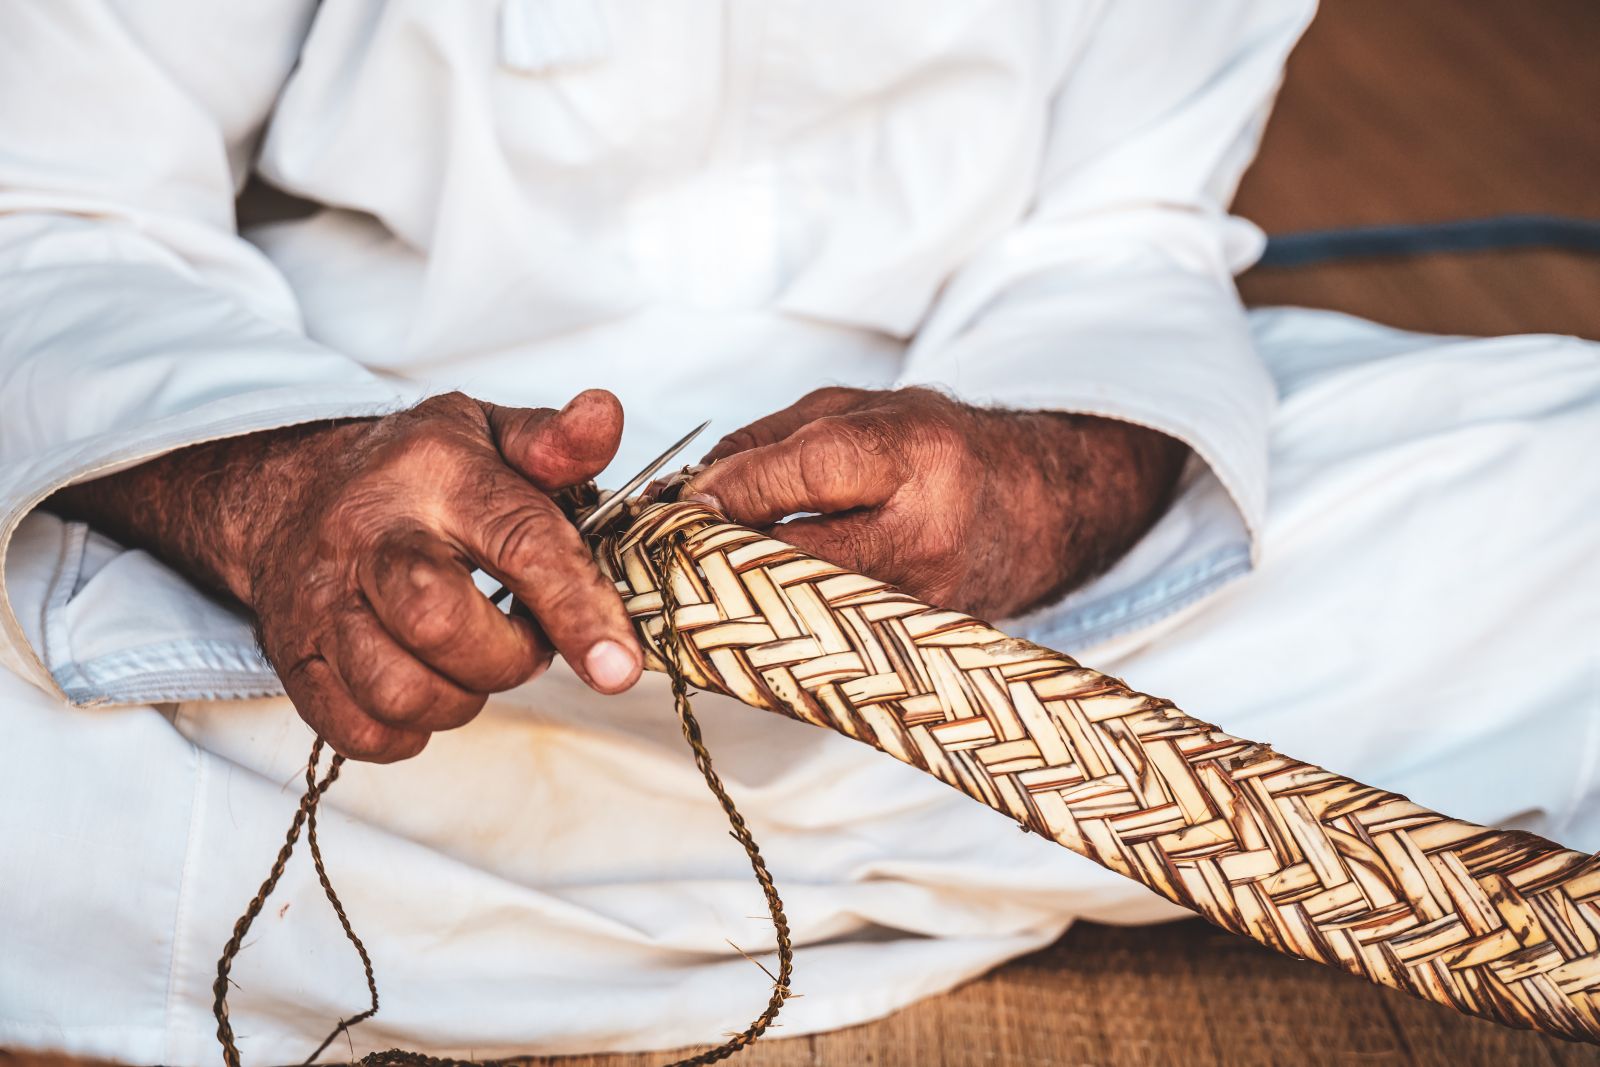 Traditional weaving in Nizwa Oman